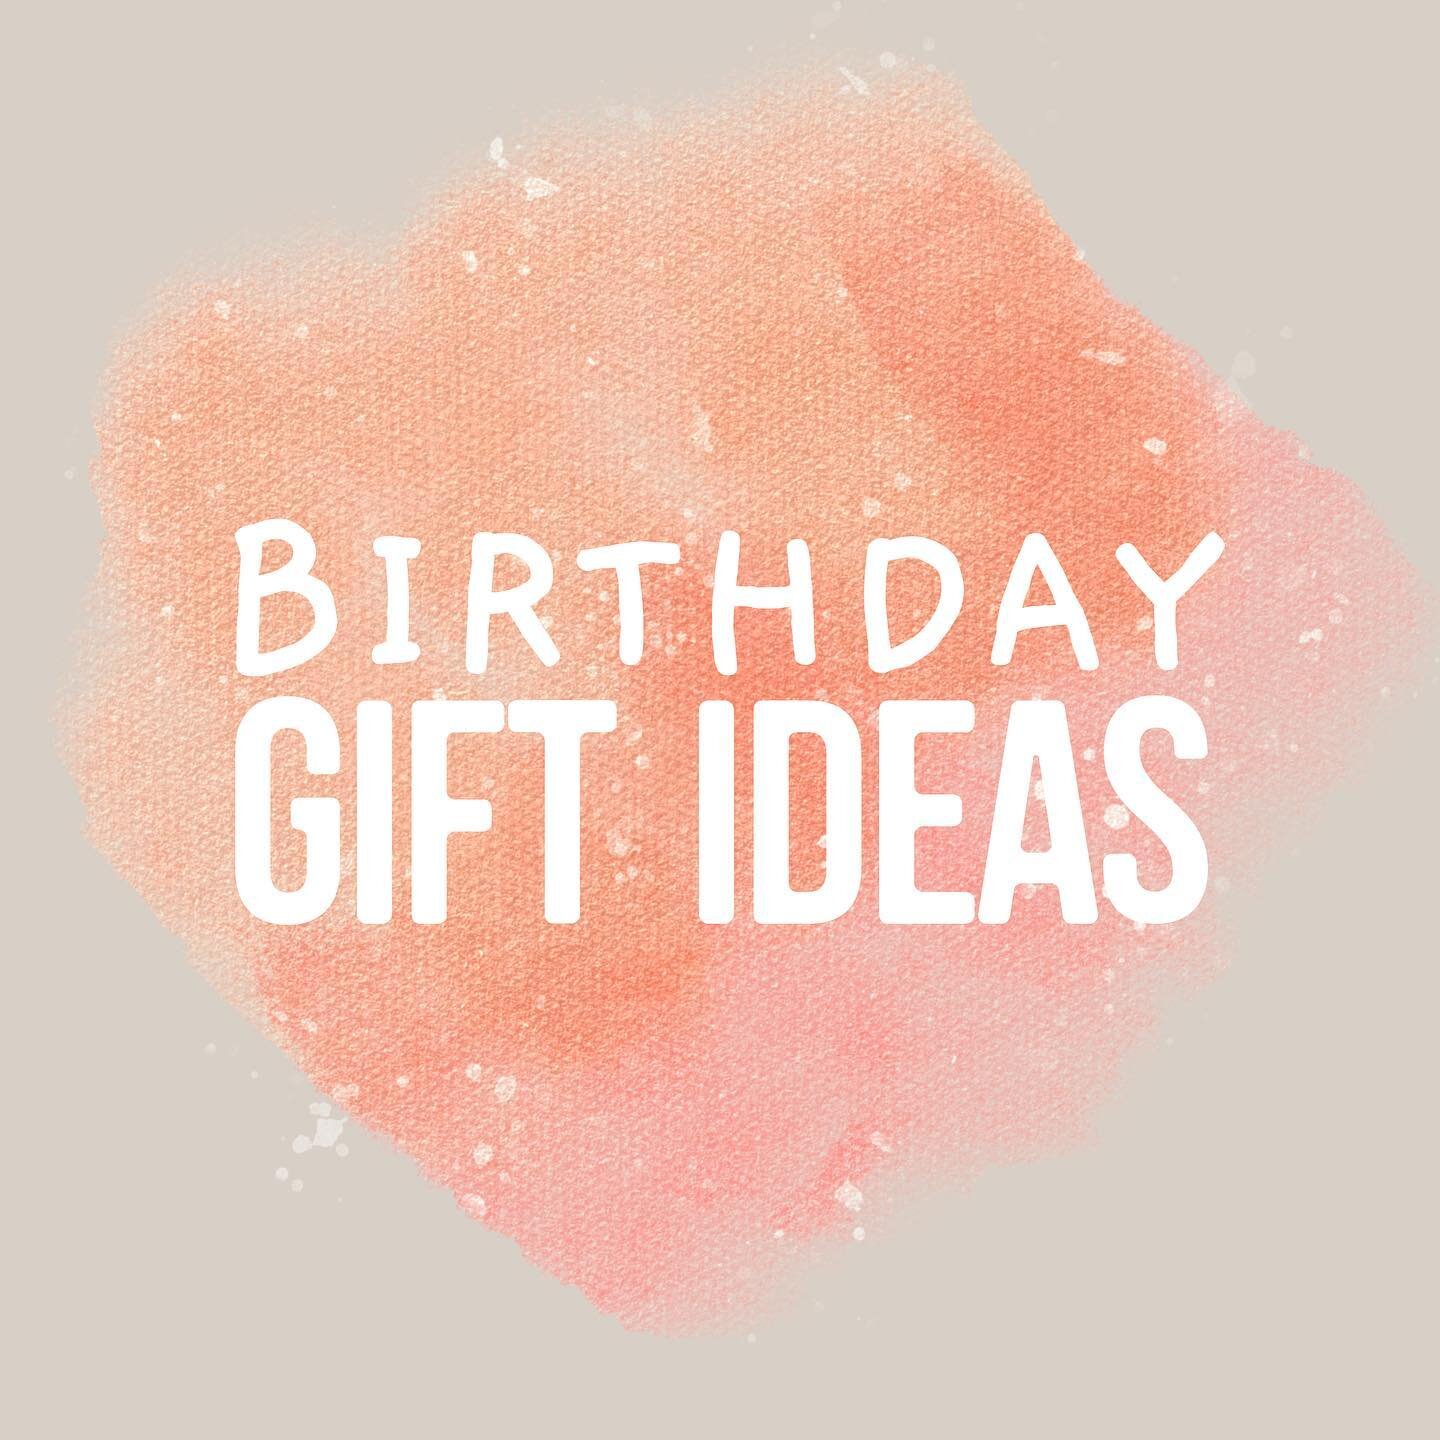 Birthday gift ideas 🎈 pt 2